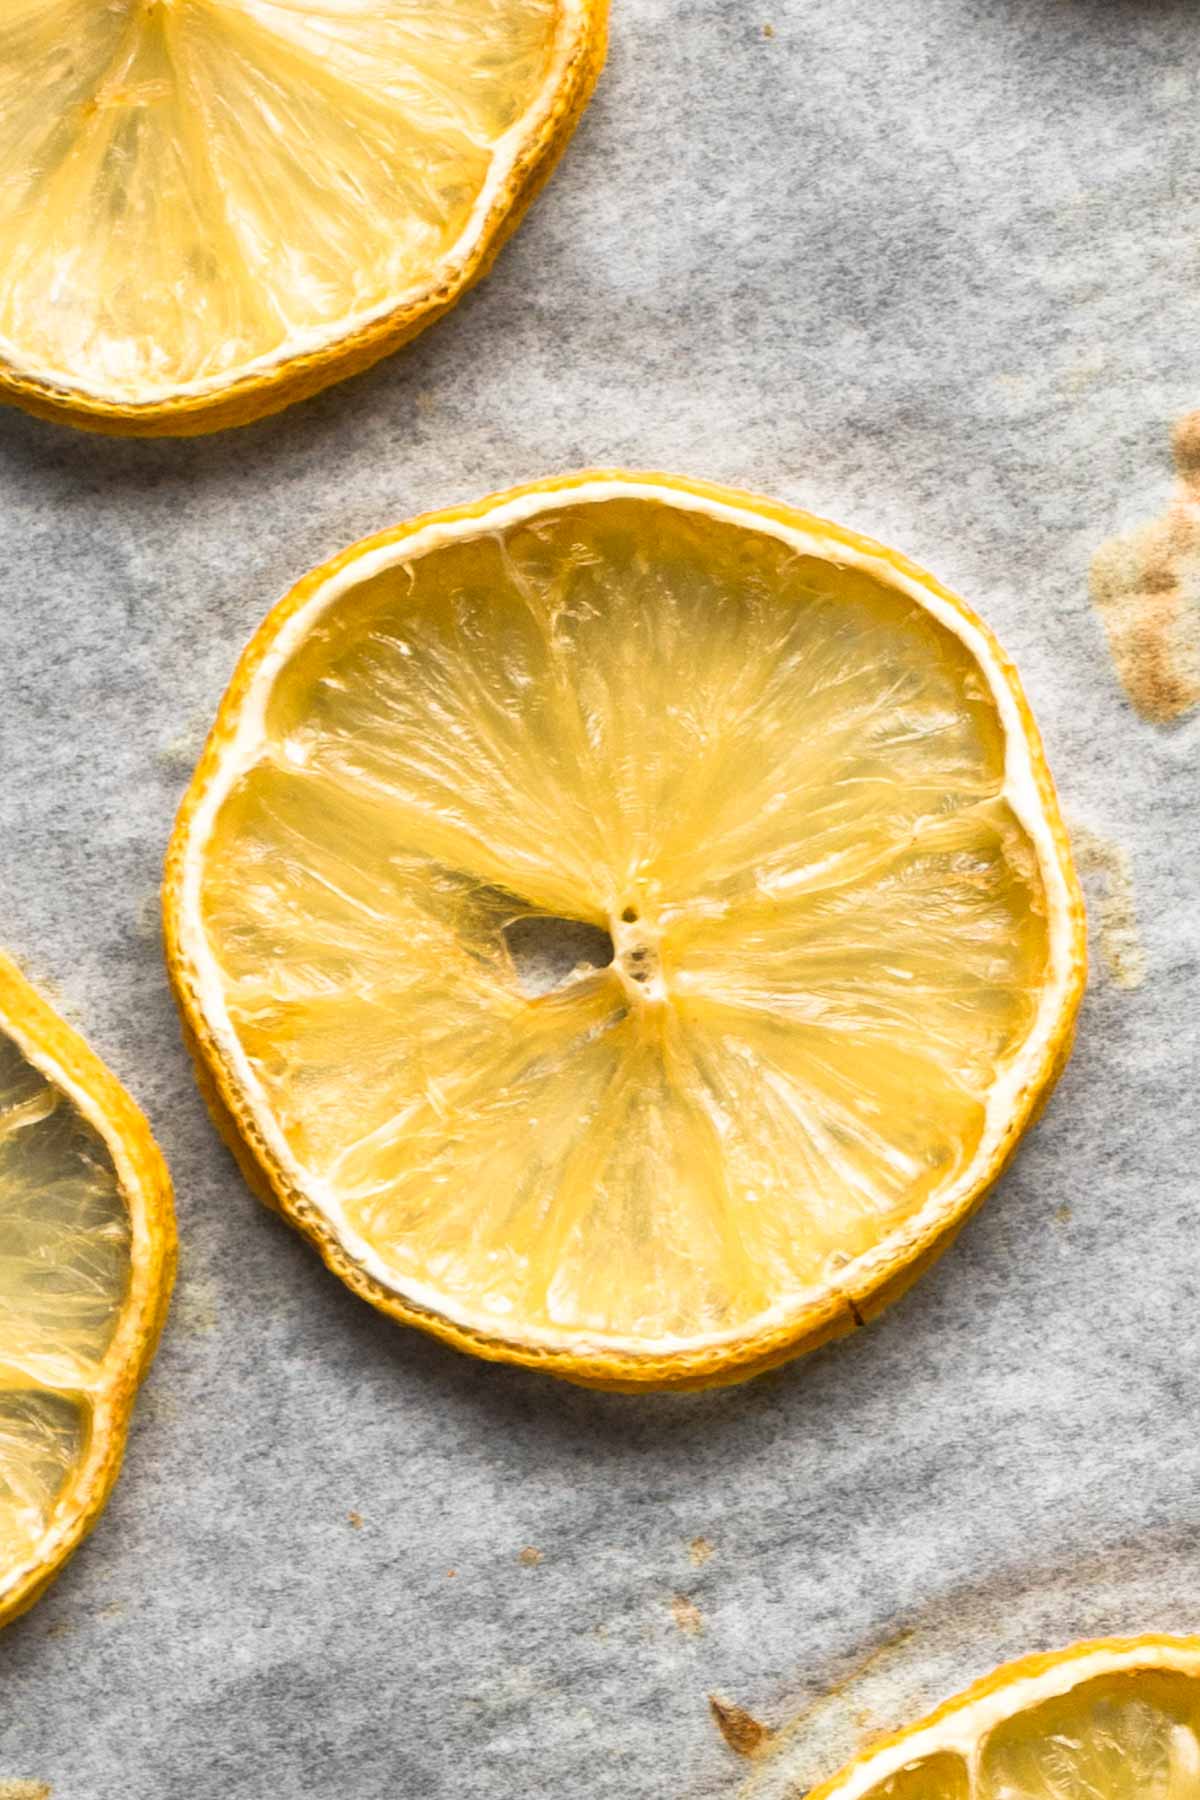 A close-up view of a lemon slice.